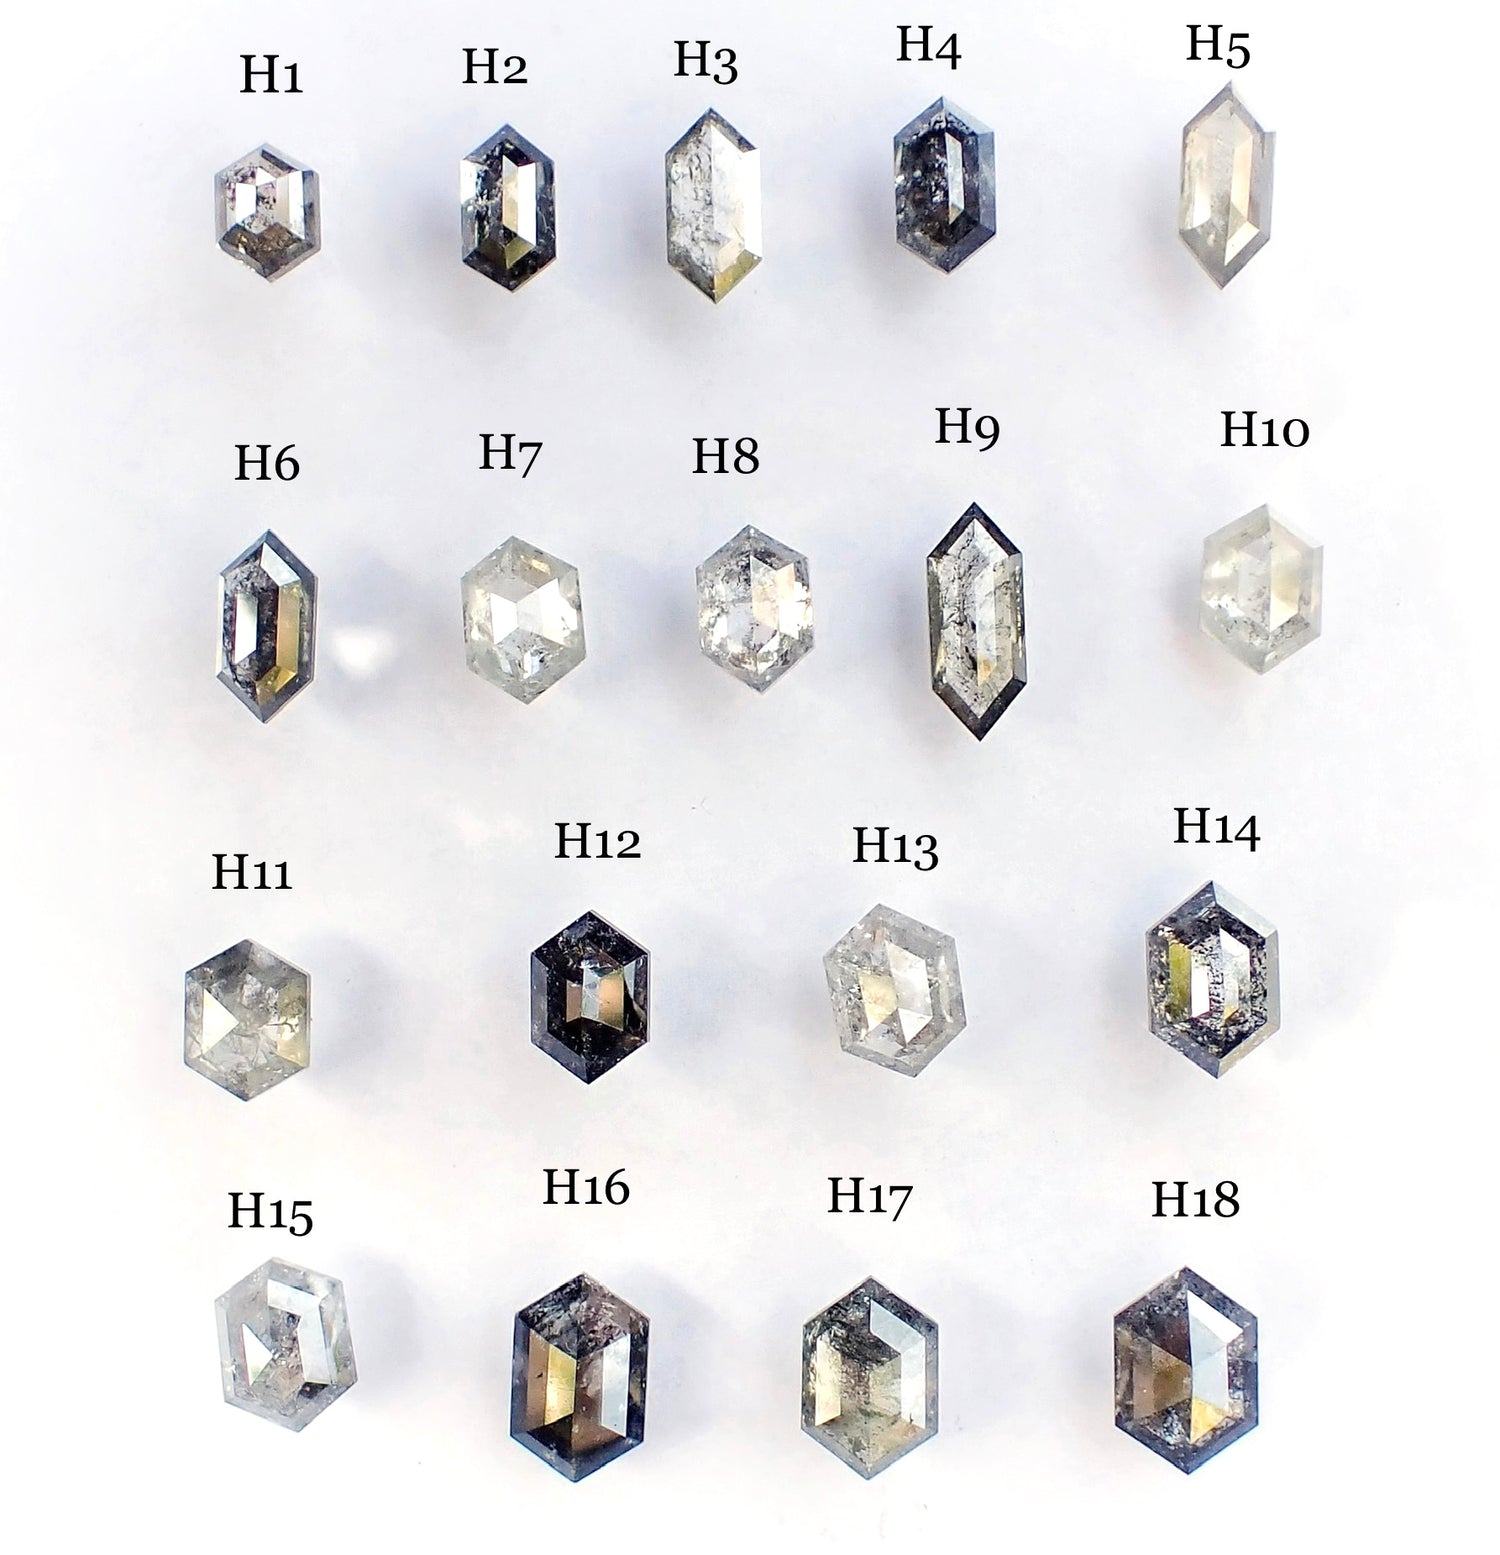 Custom: Elongated Hexagon Cut, Salt and Pepper Diamond Engagement Ring - mossNstone